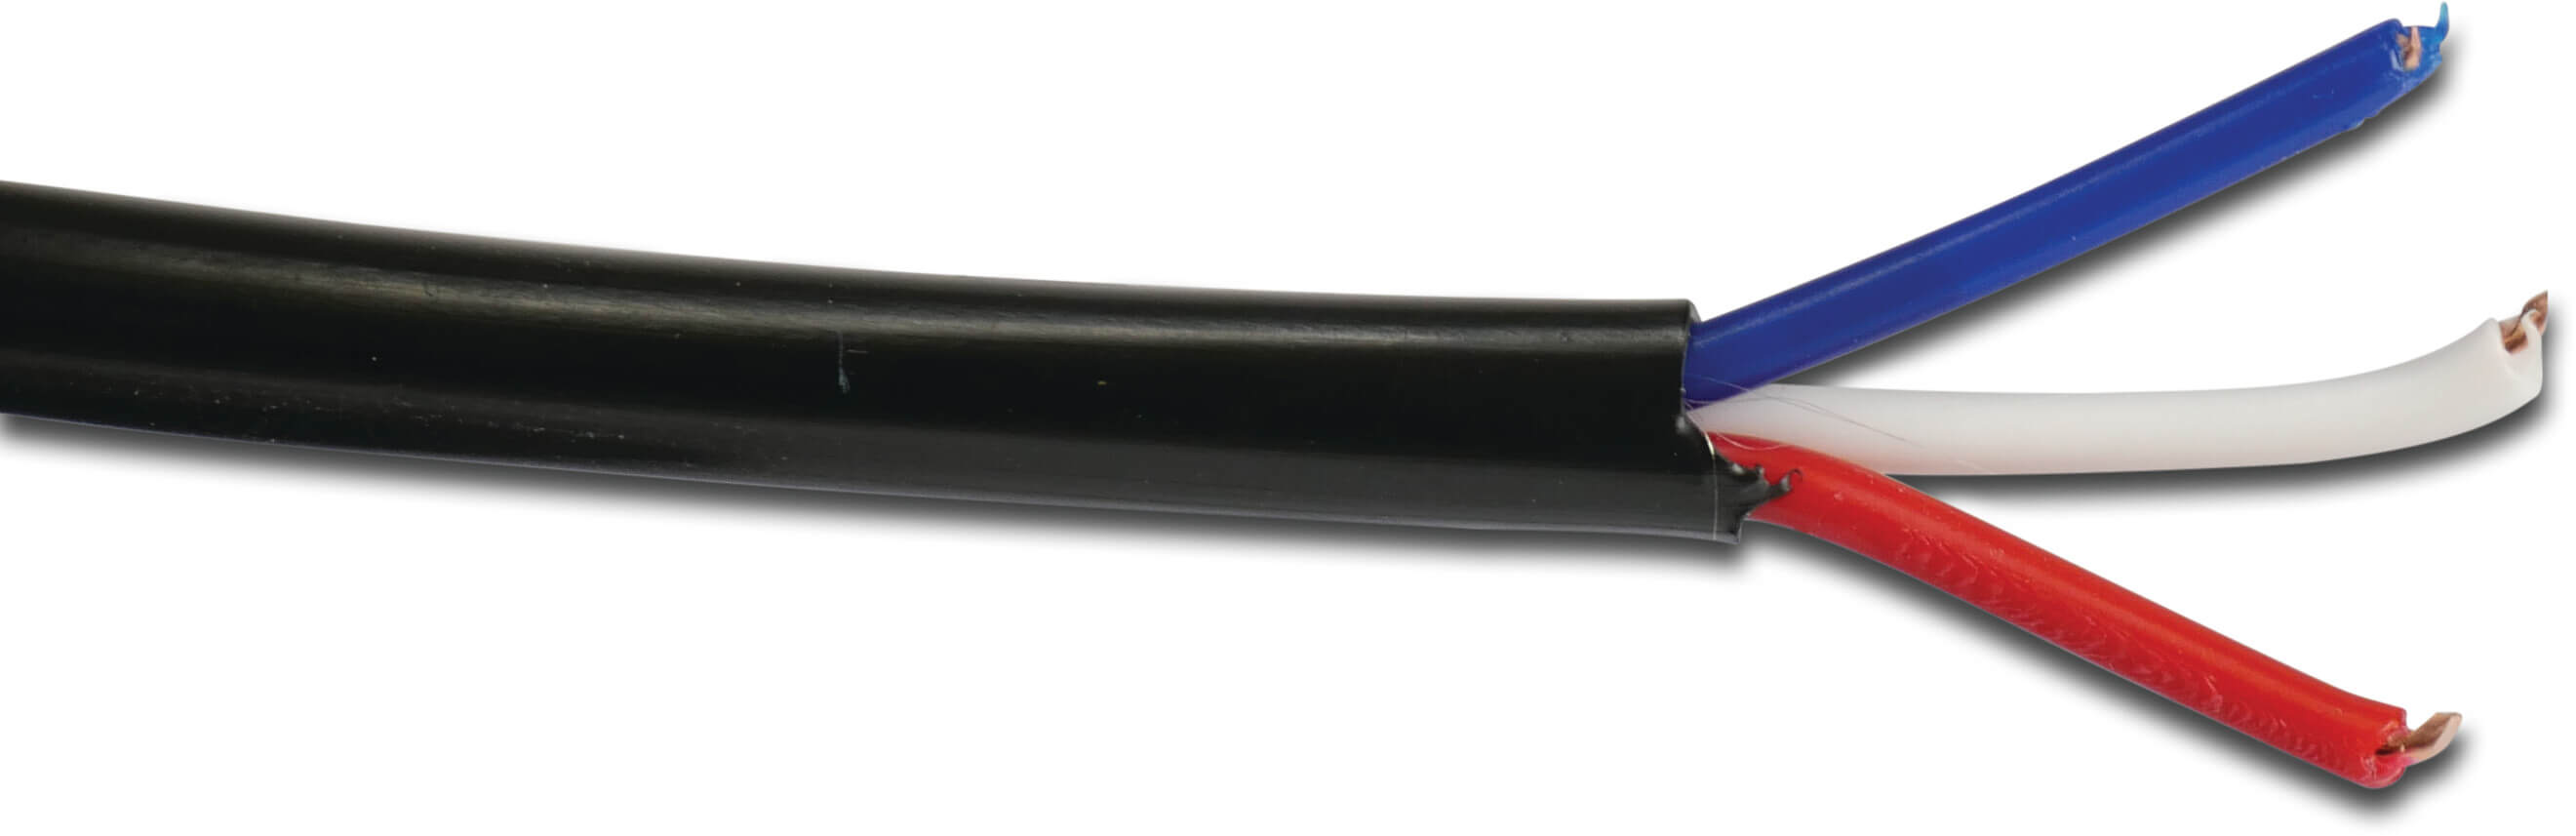 Elektrisk kabel koppar svart 50m type 3 x 0,75mm² 3 colour coded conductors